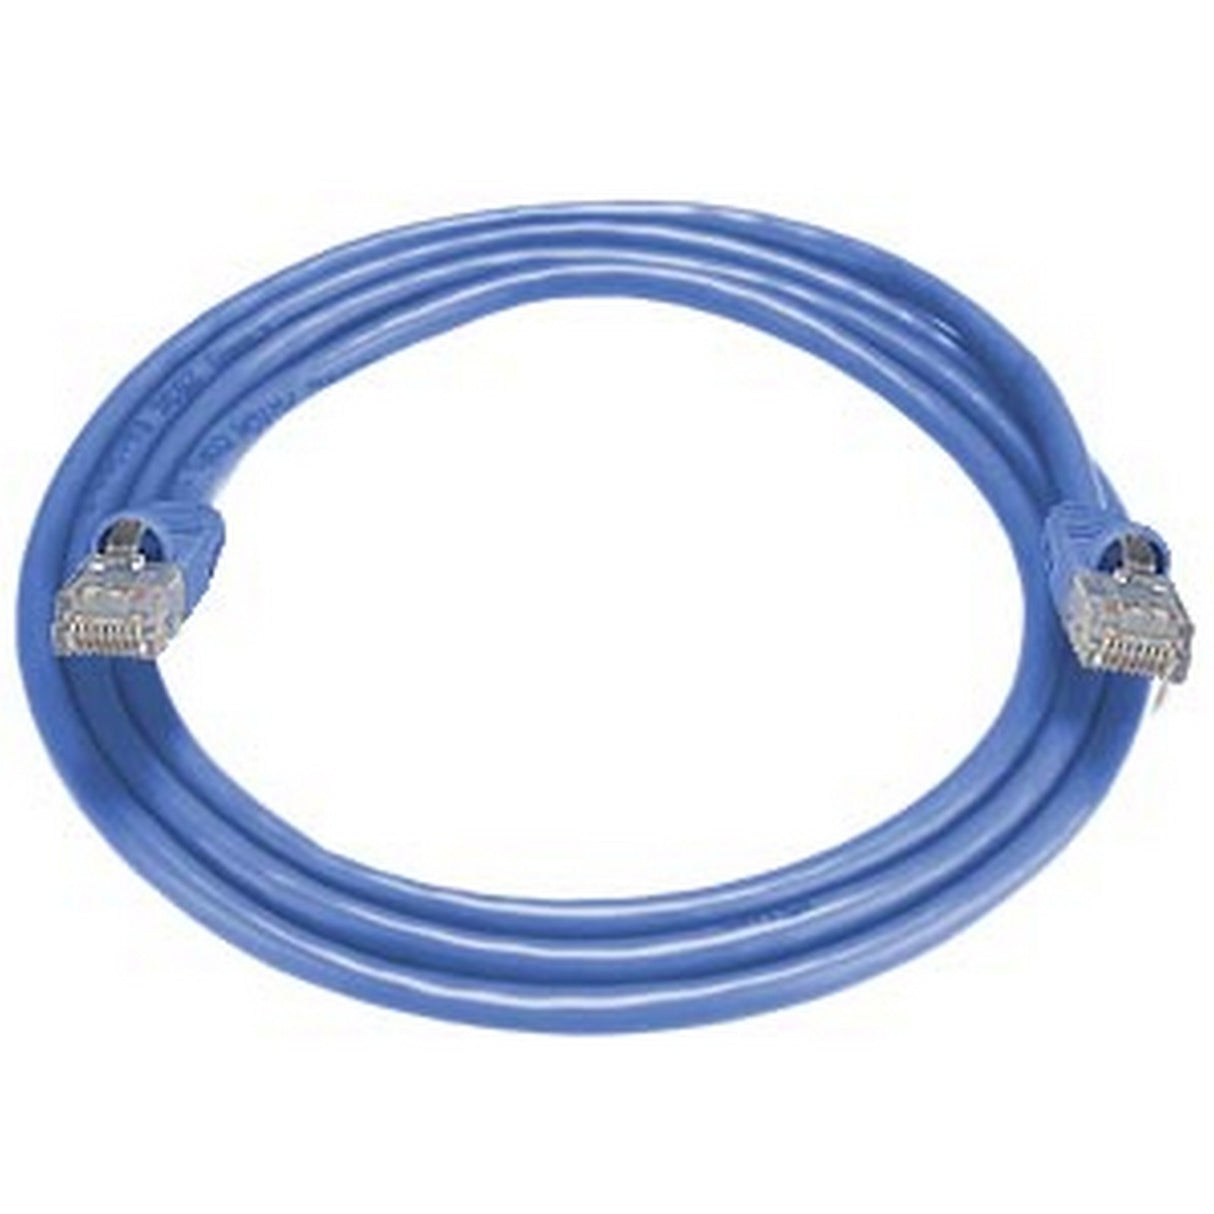 NTI CAT5E-2-BLUE CAT5e Stranded Unshielded Cable, Blue, 2-Foot